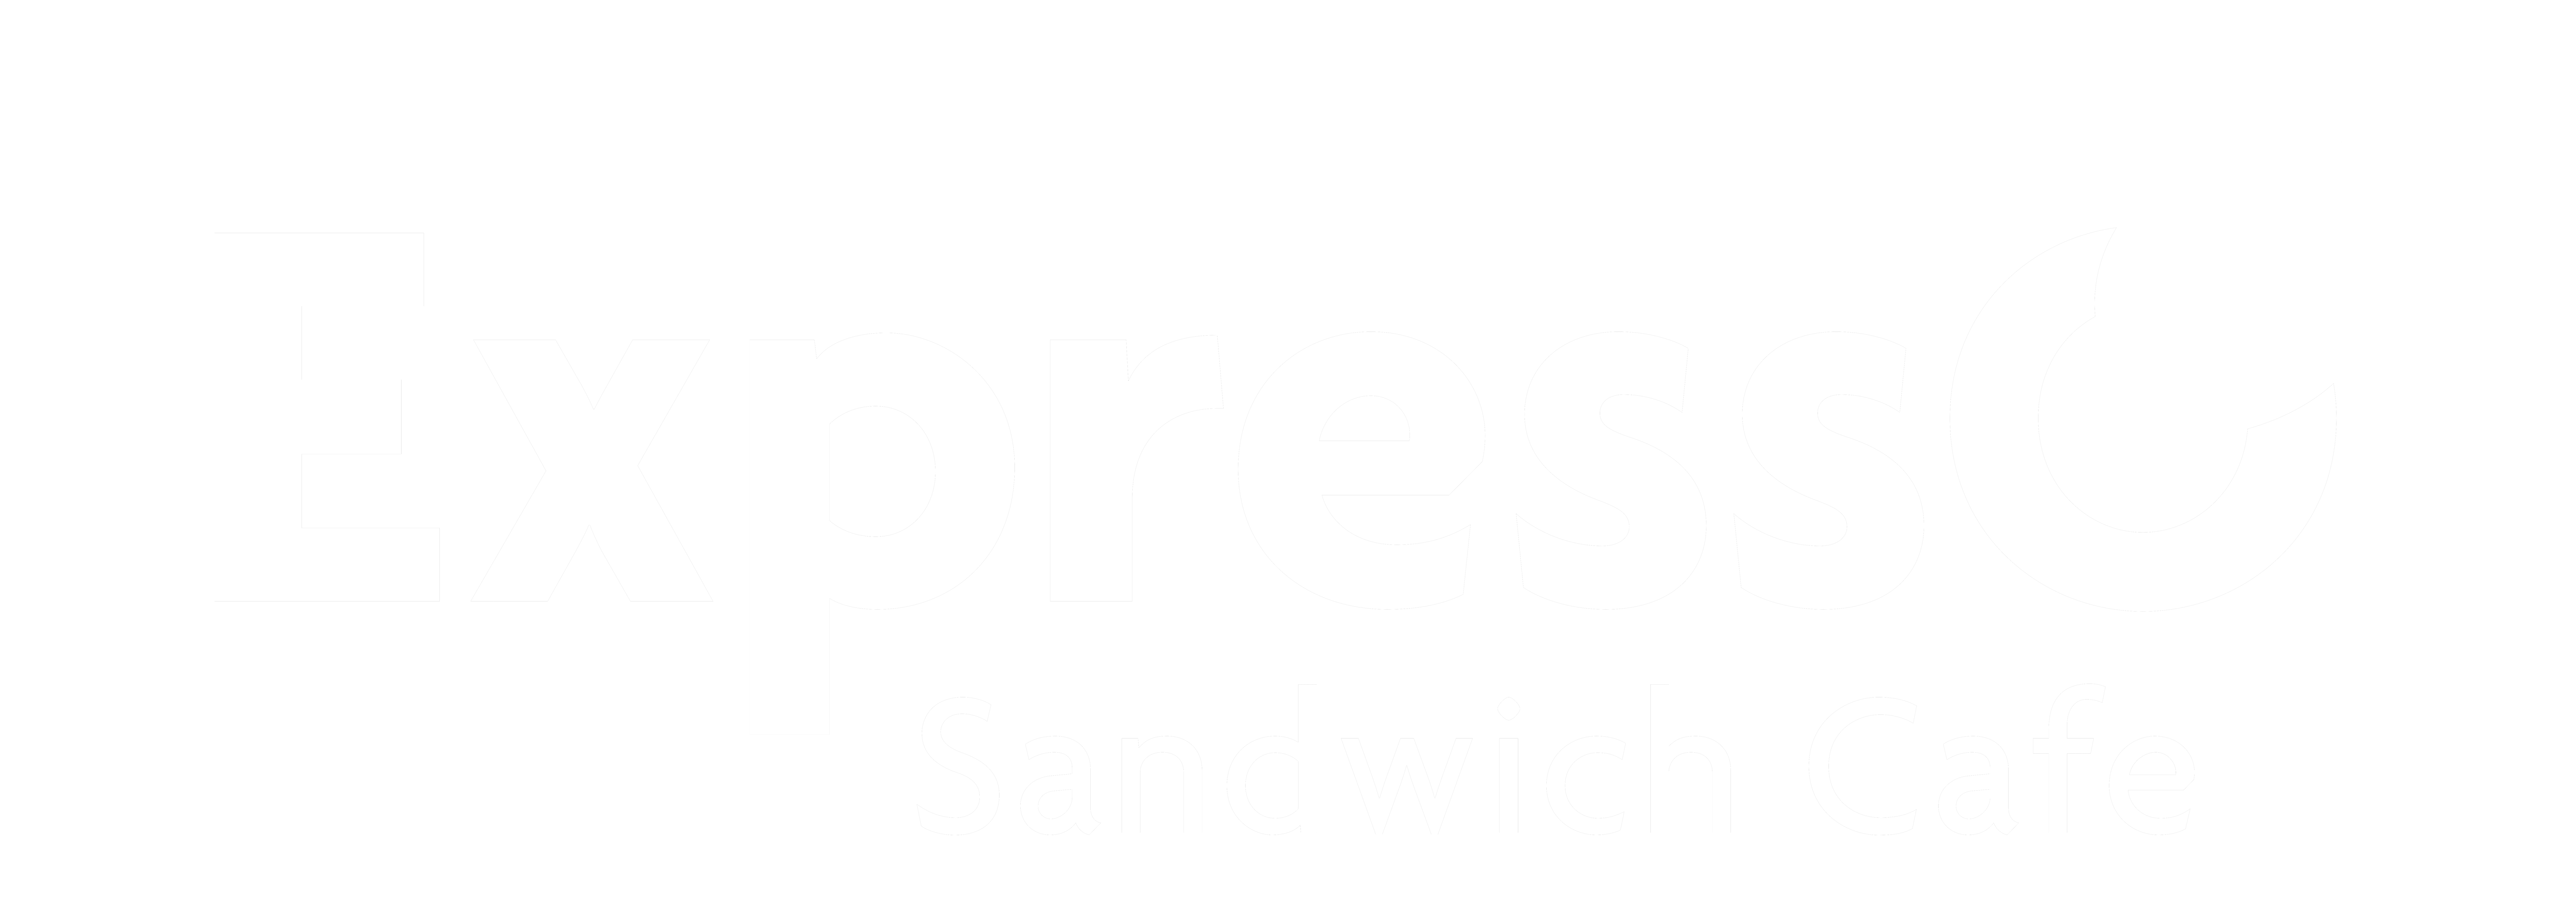 Expresso Sandwich Cafe